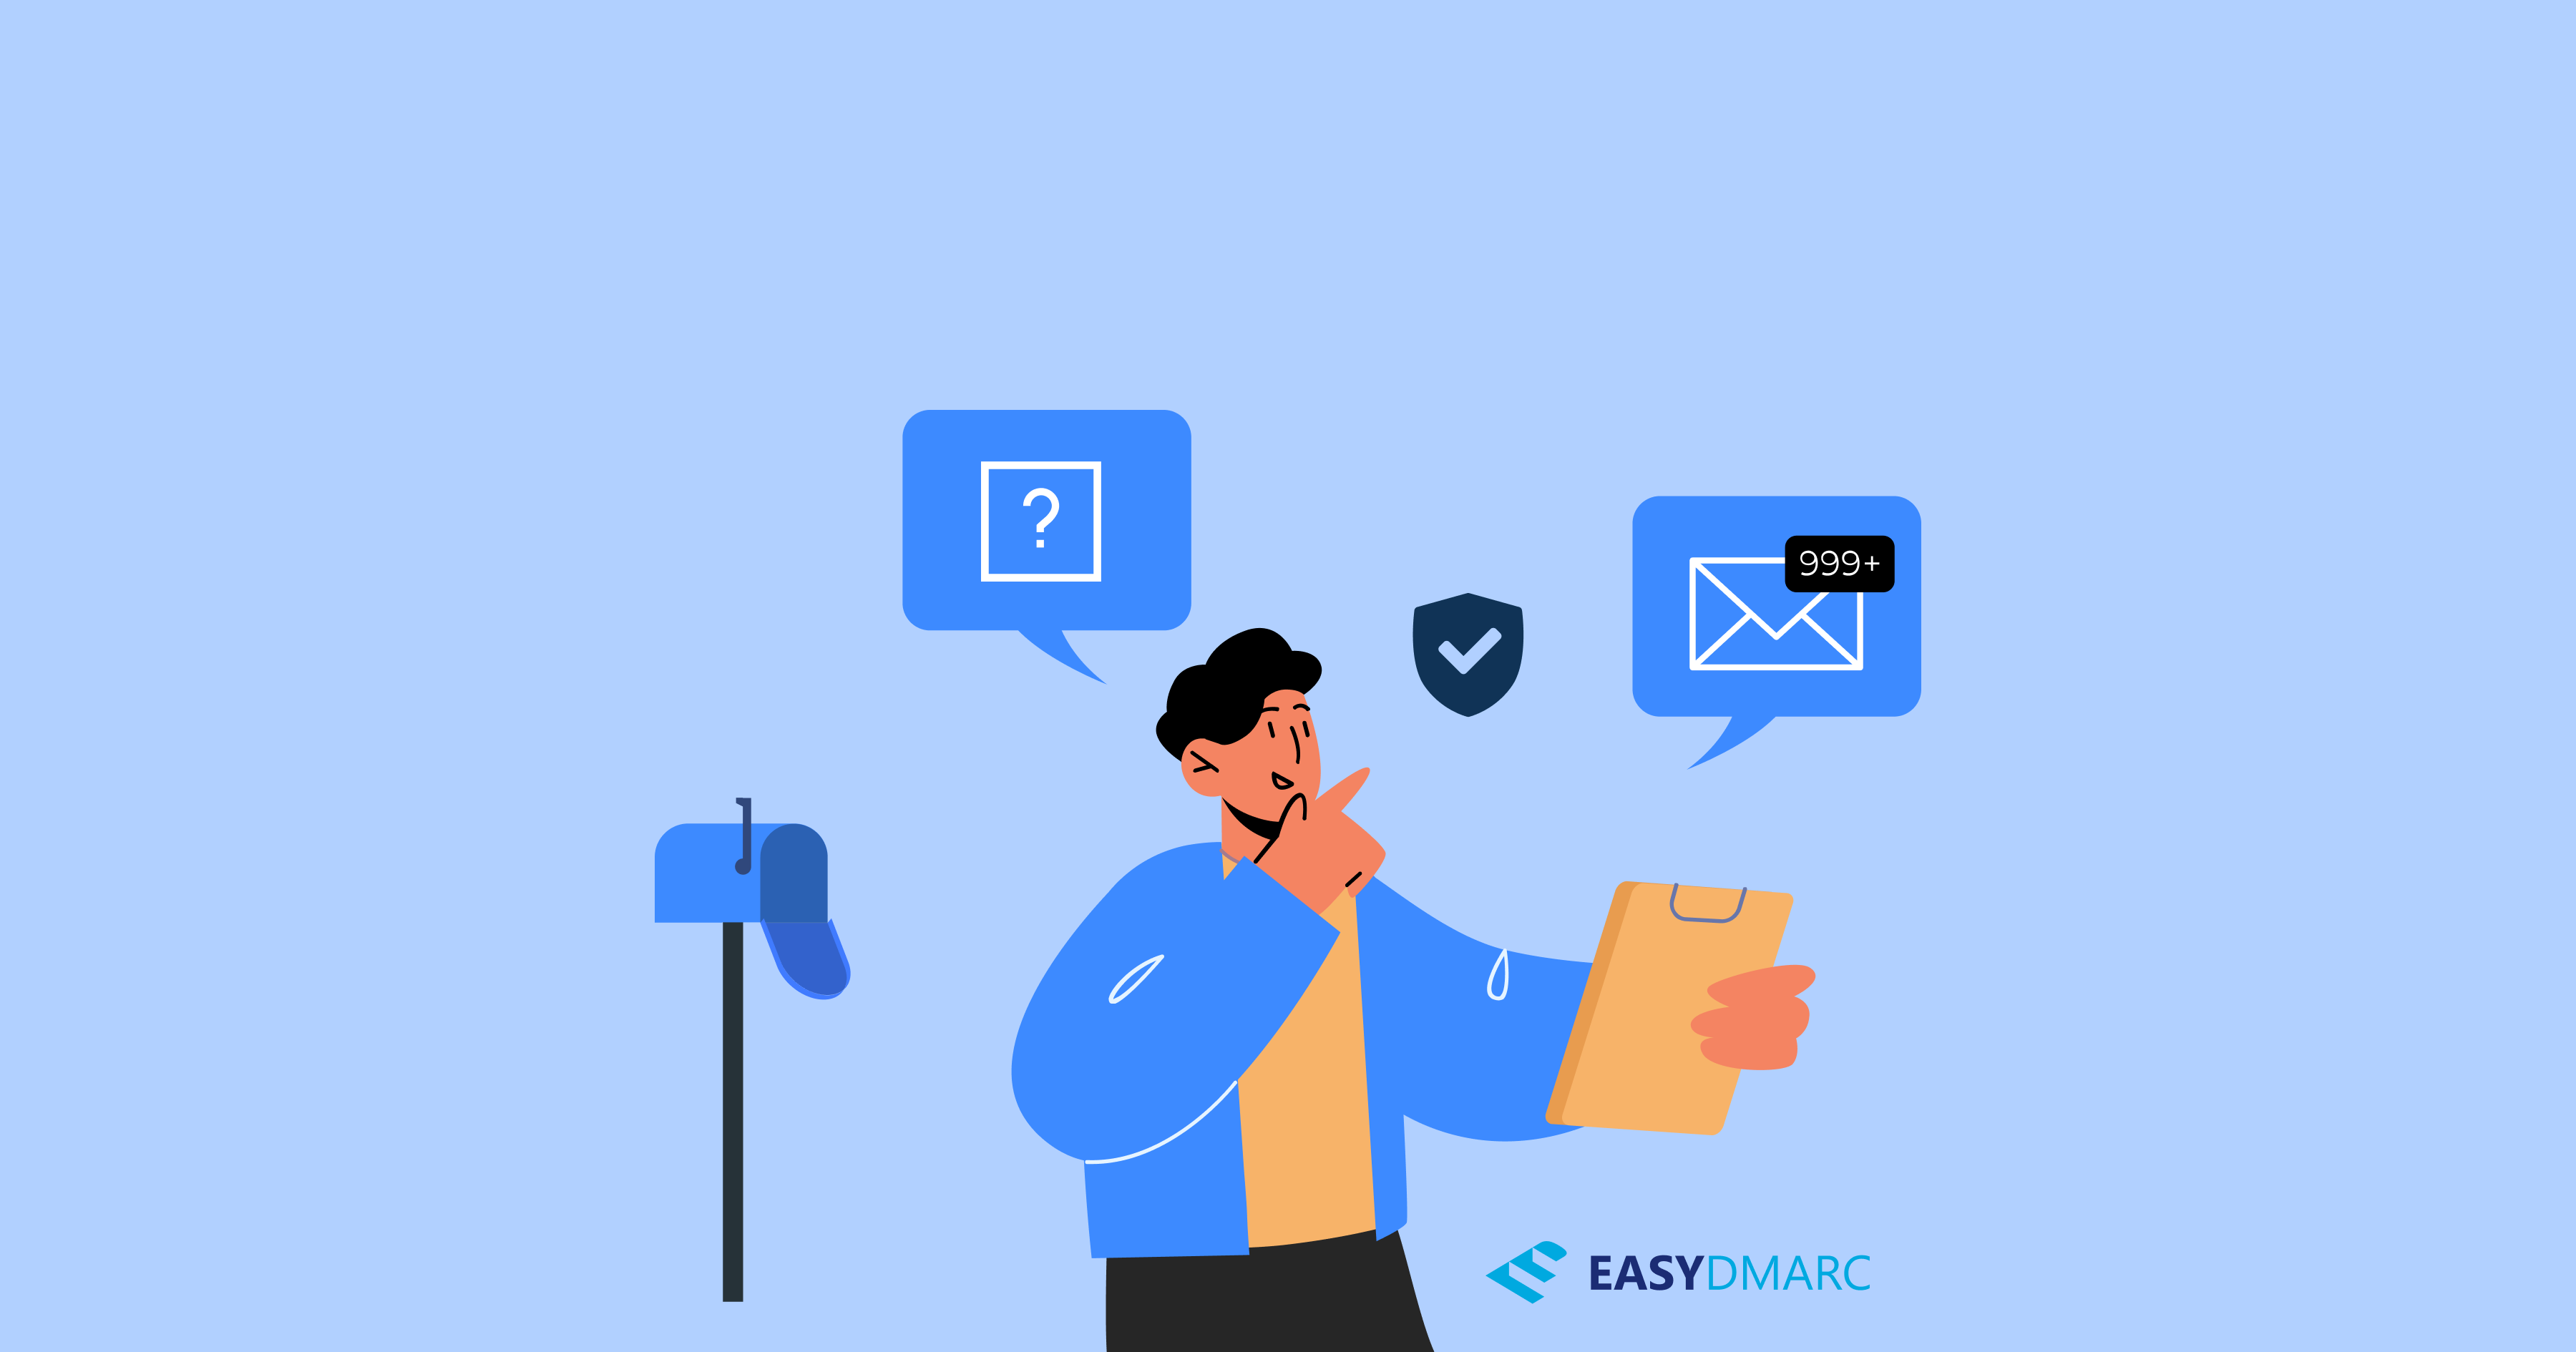 EasyDMARC FAQ: how to set up EasyDMARC